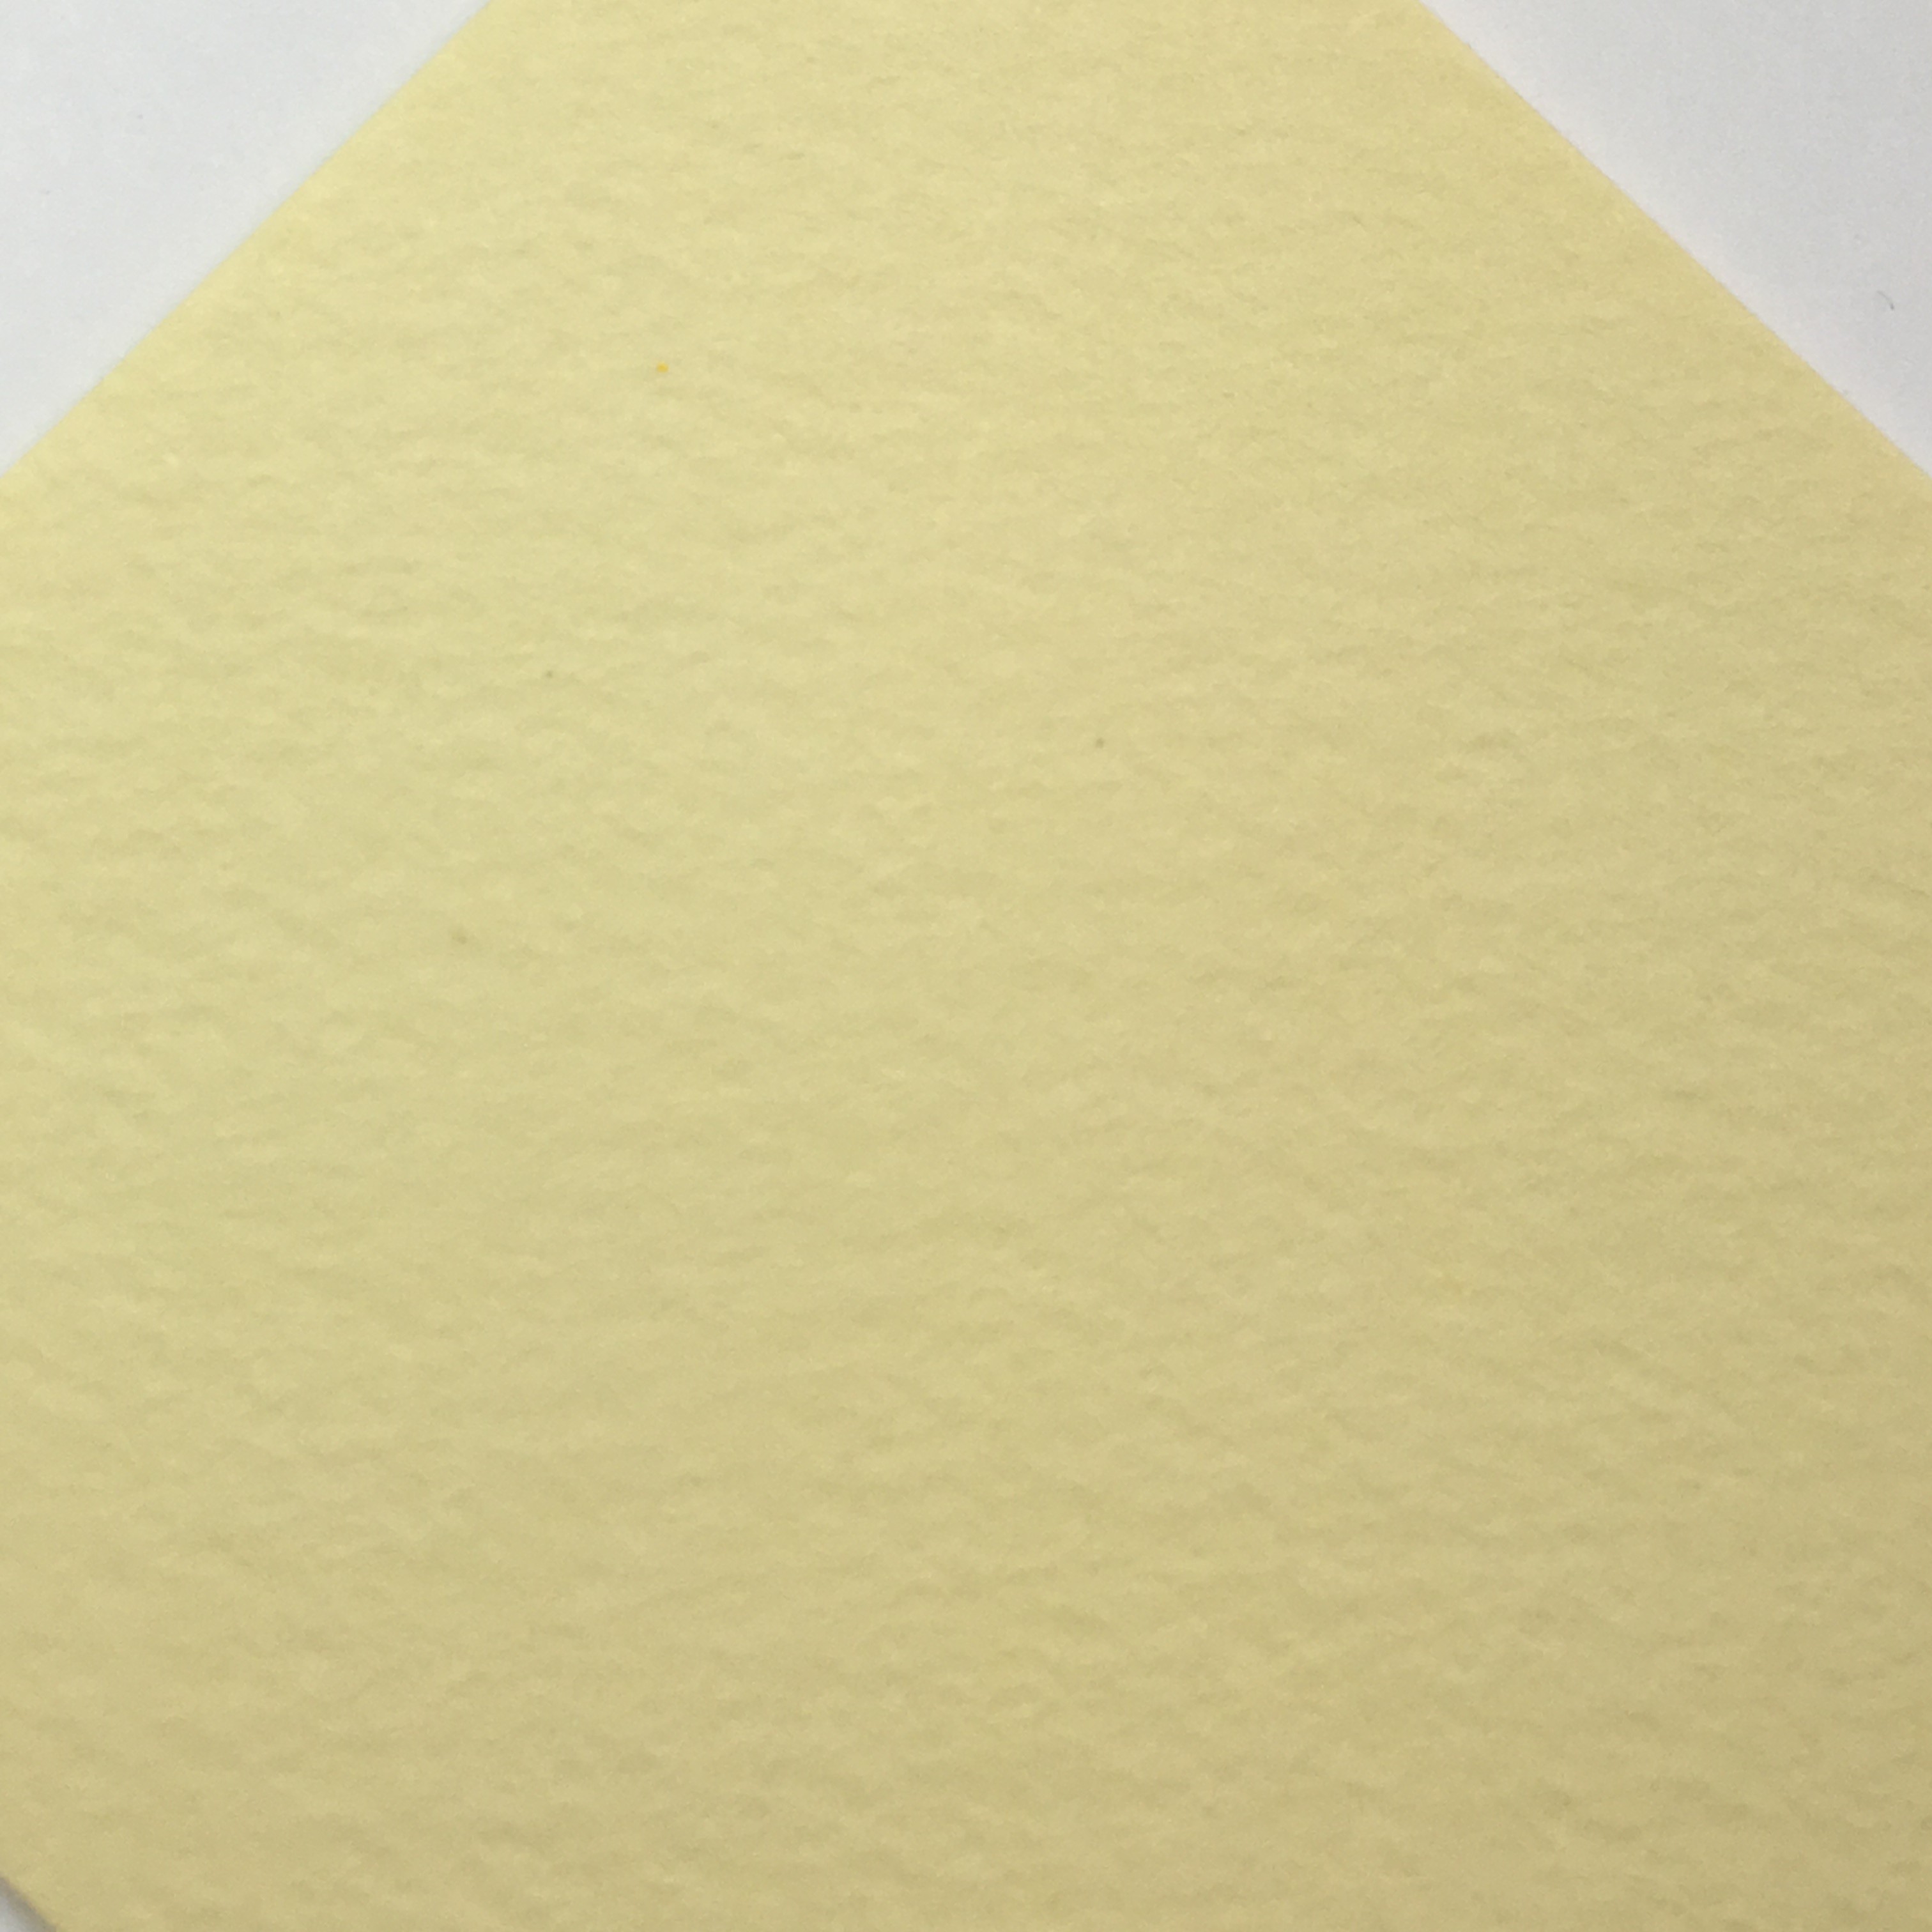 Дизайнерский картон с легкой текстурой Modigliani camoscio, 260г/м2, 30х30 см